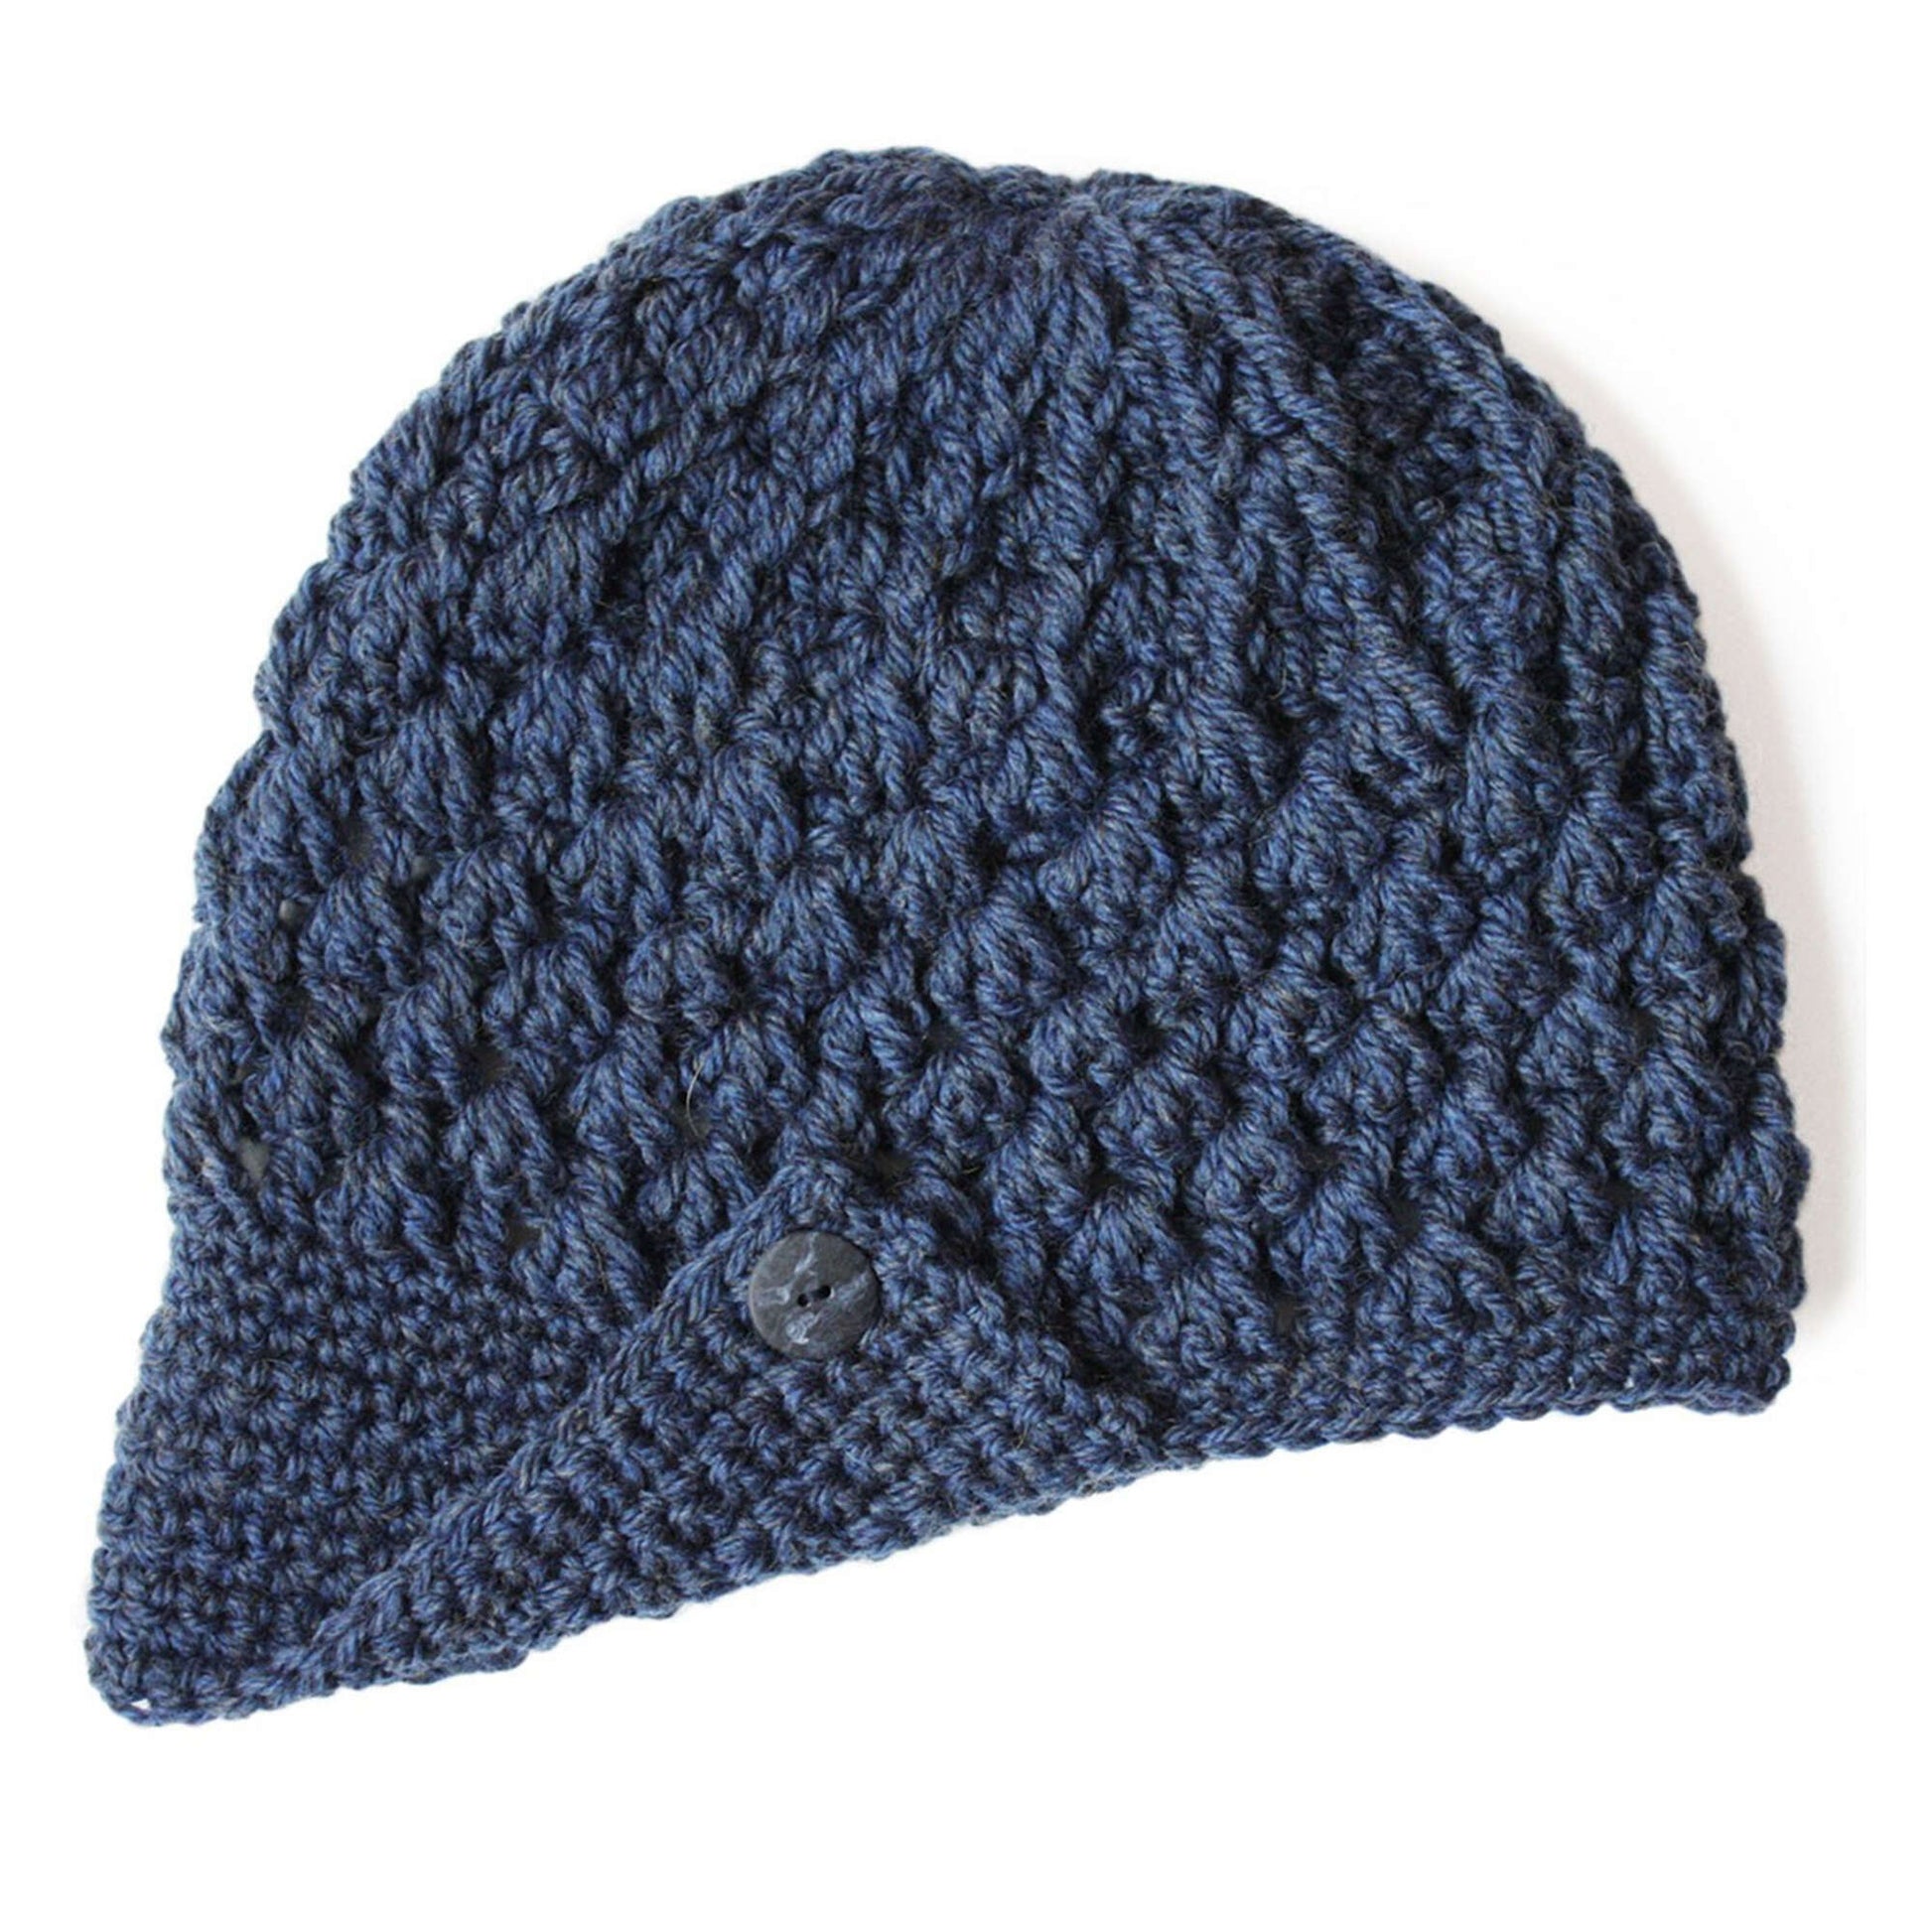 Free Patons To The Peak Hat Crochet Pattern